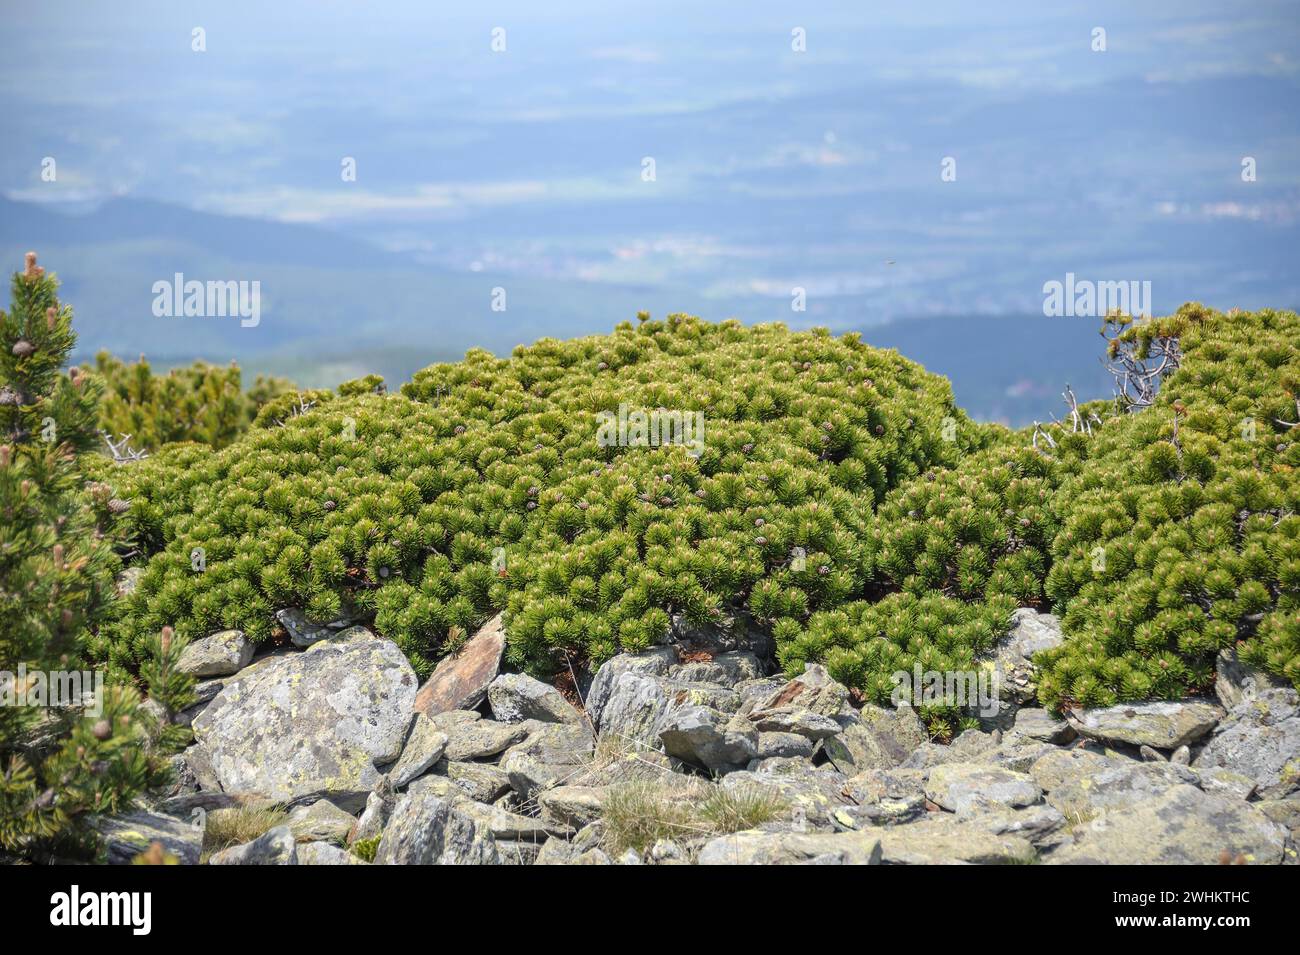 Krummholz pine (Pinus mugo var. pumilio), Krkonose Mountains, Schneekoppe, Federal Republic of Germany Stock Photo